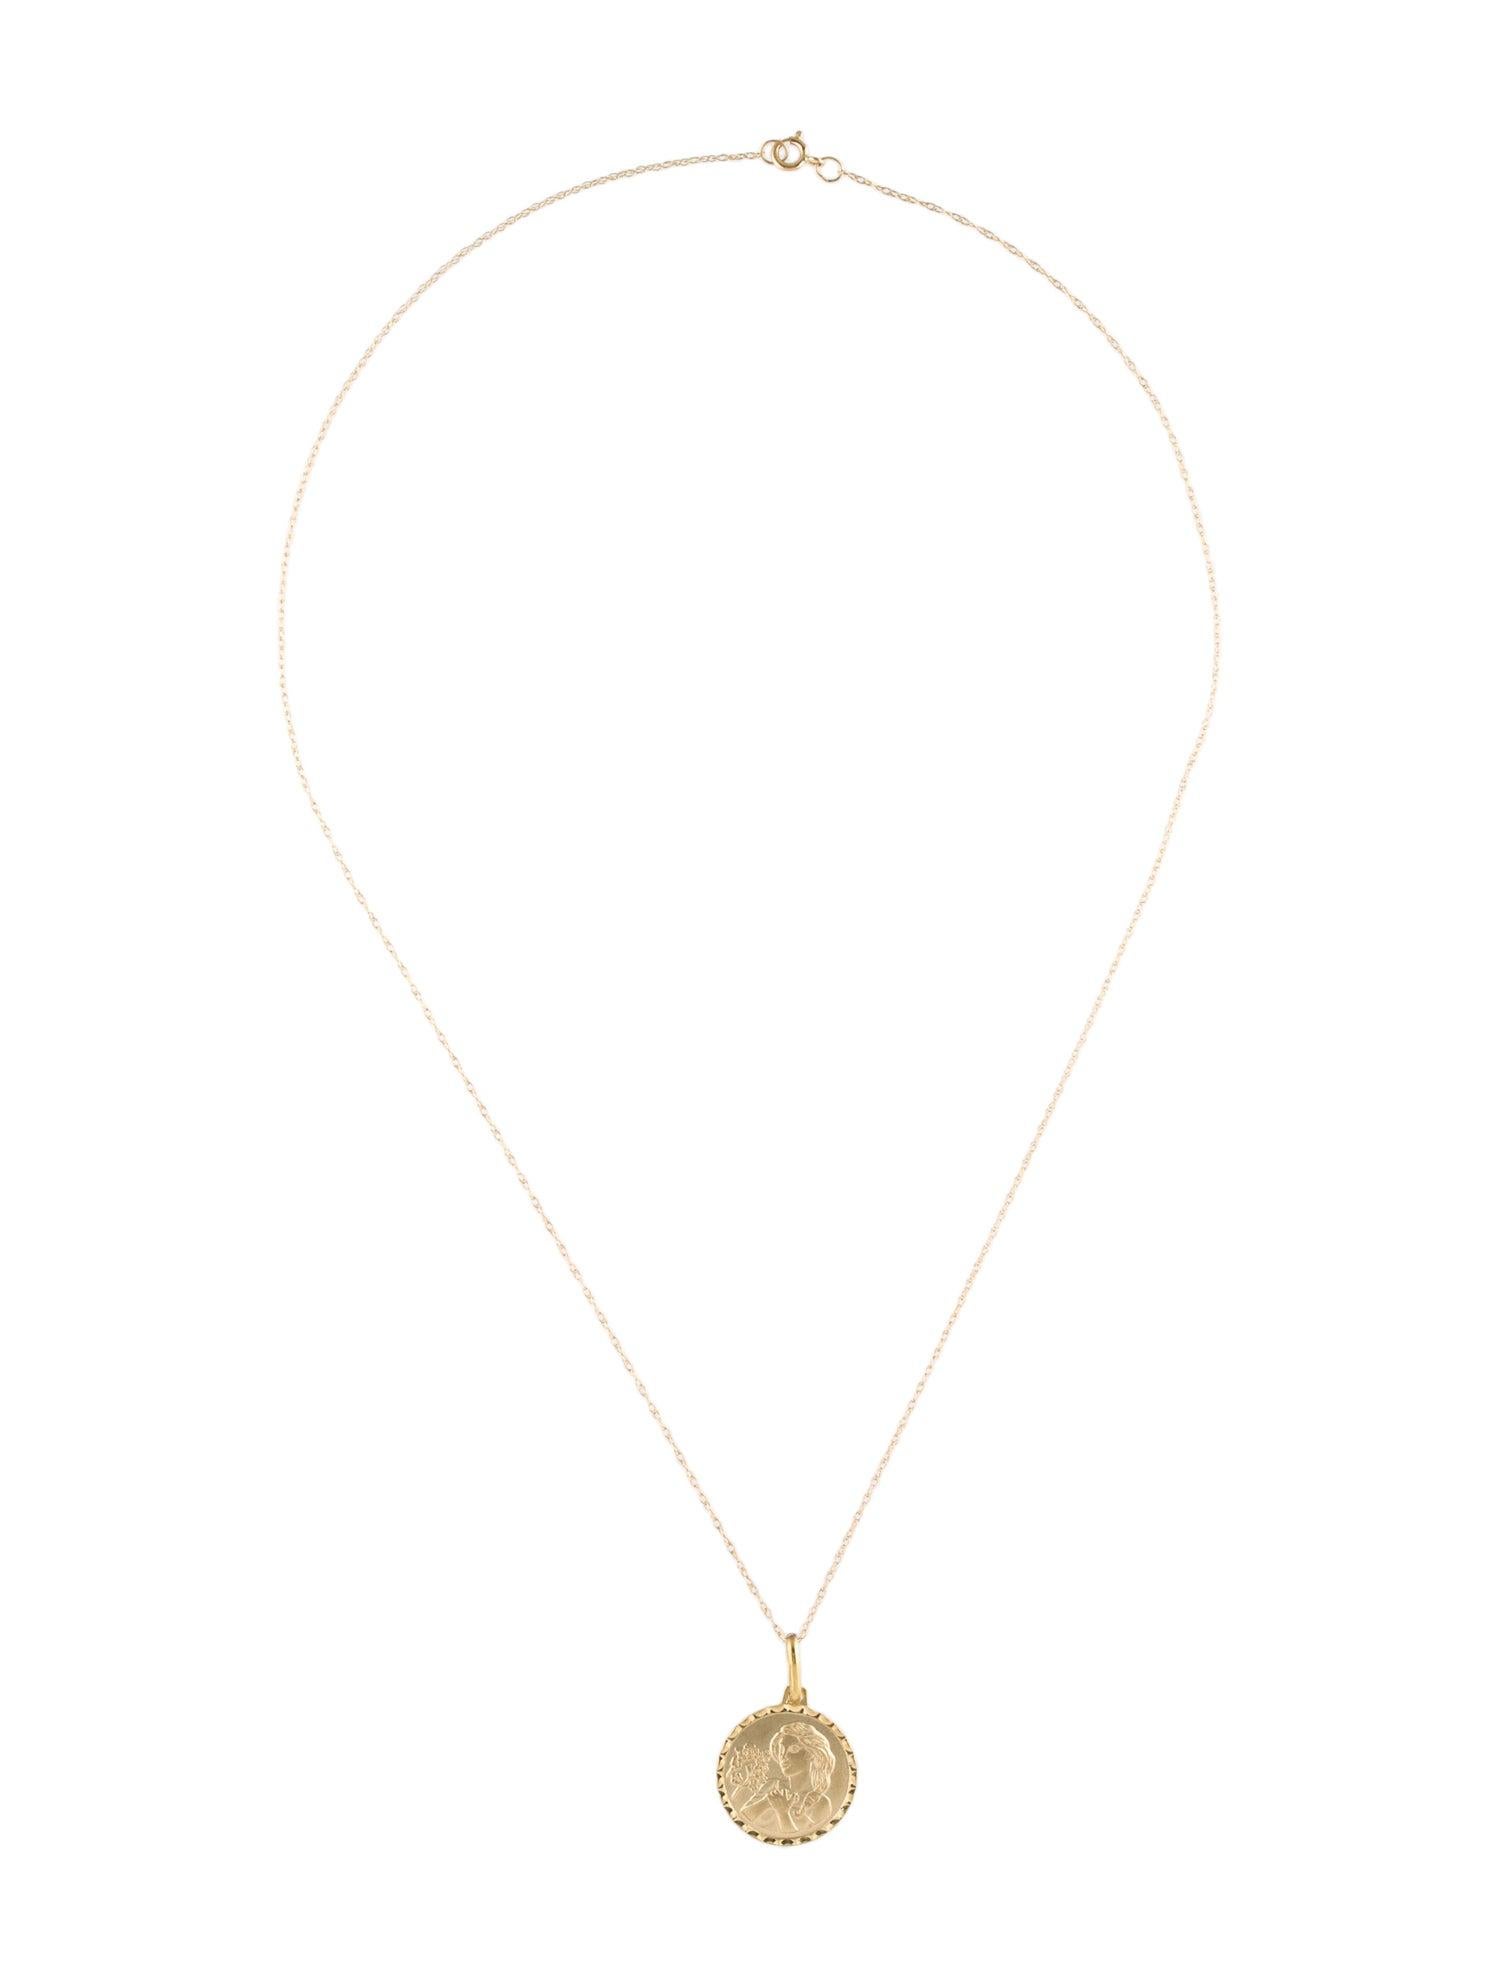 Contemporary 14k Yellow Gold Zodiac Pendant Necklace, Virgo For Sale